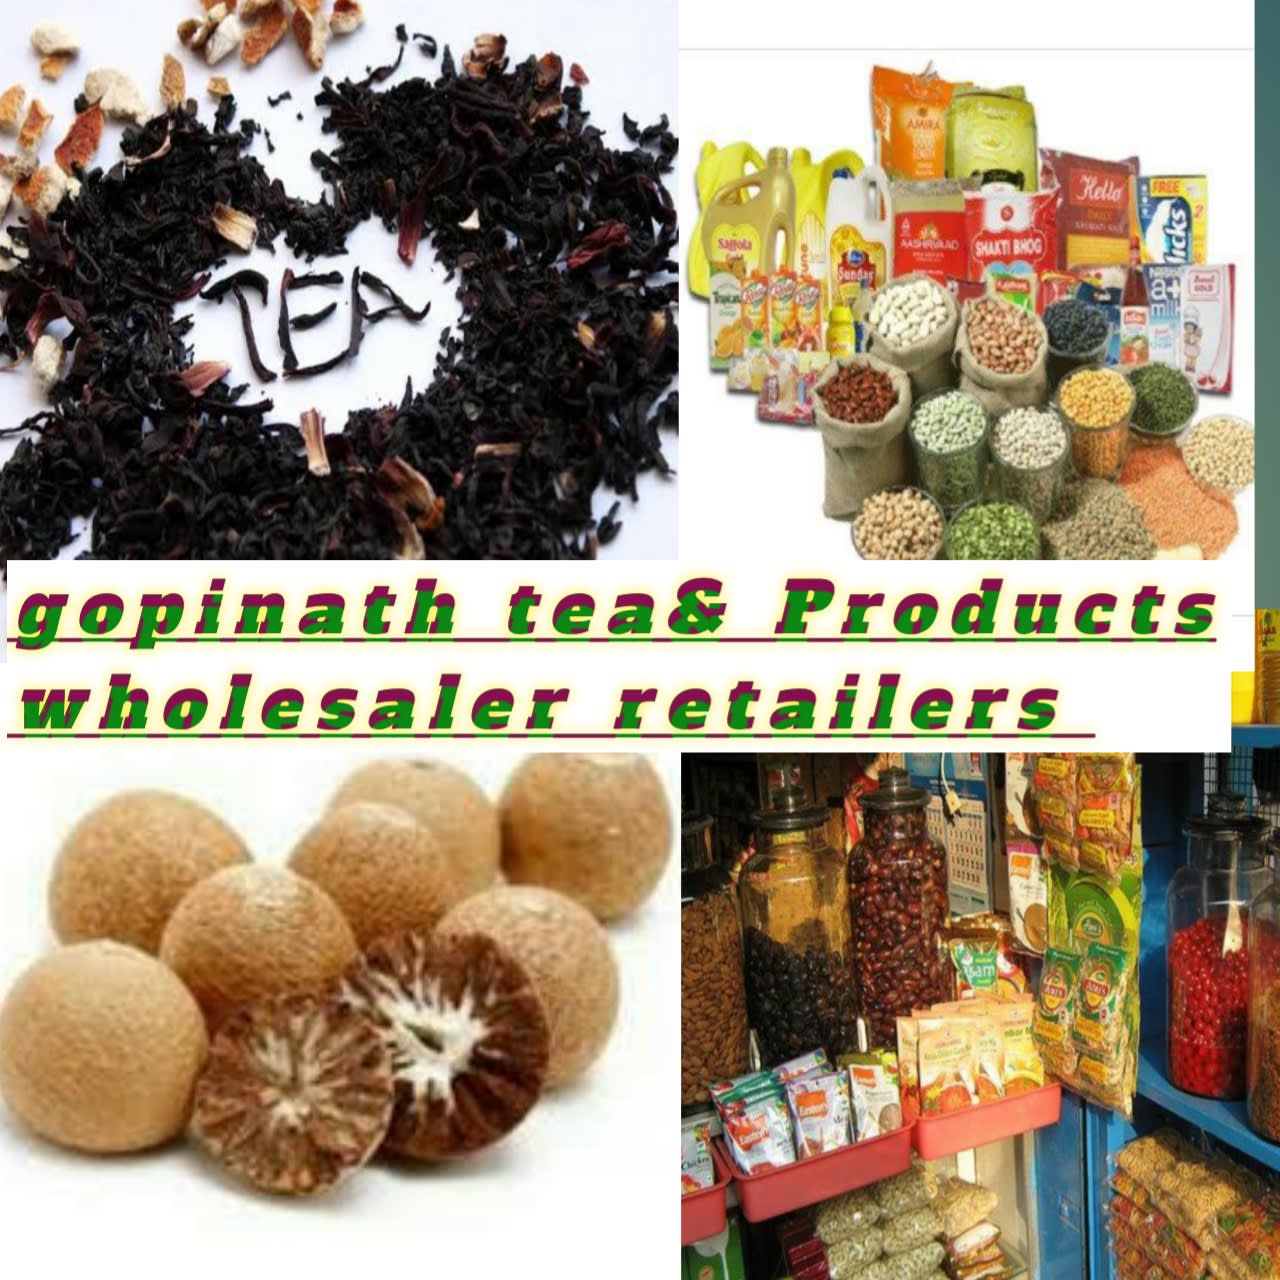 Gopinath tea& Products